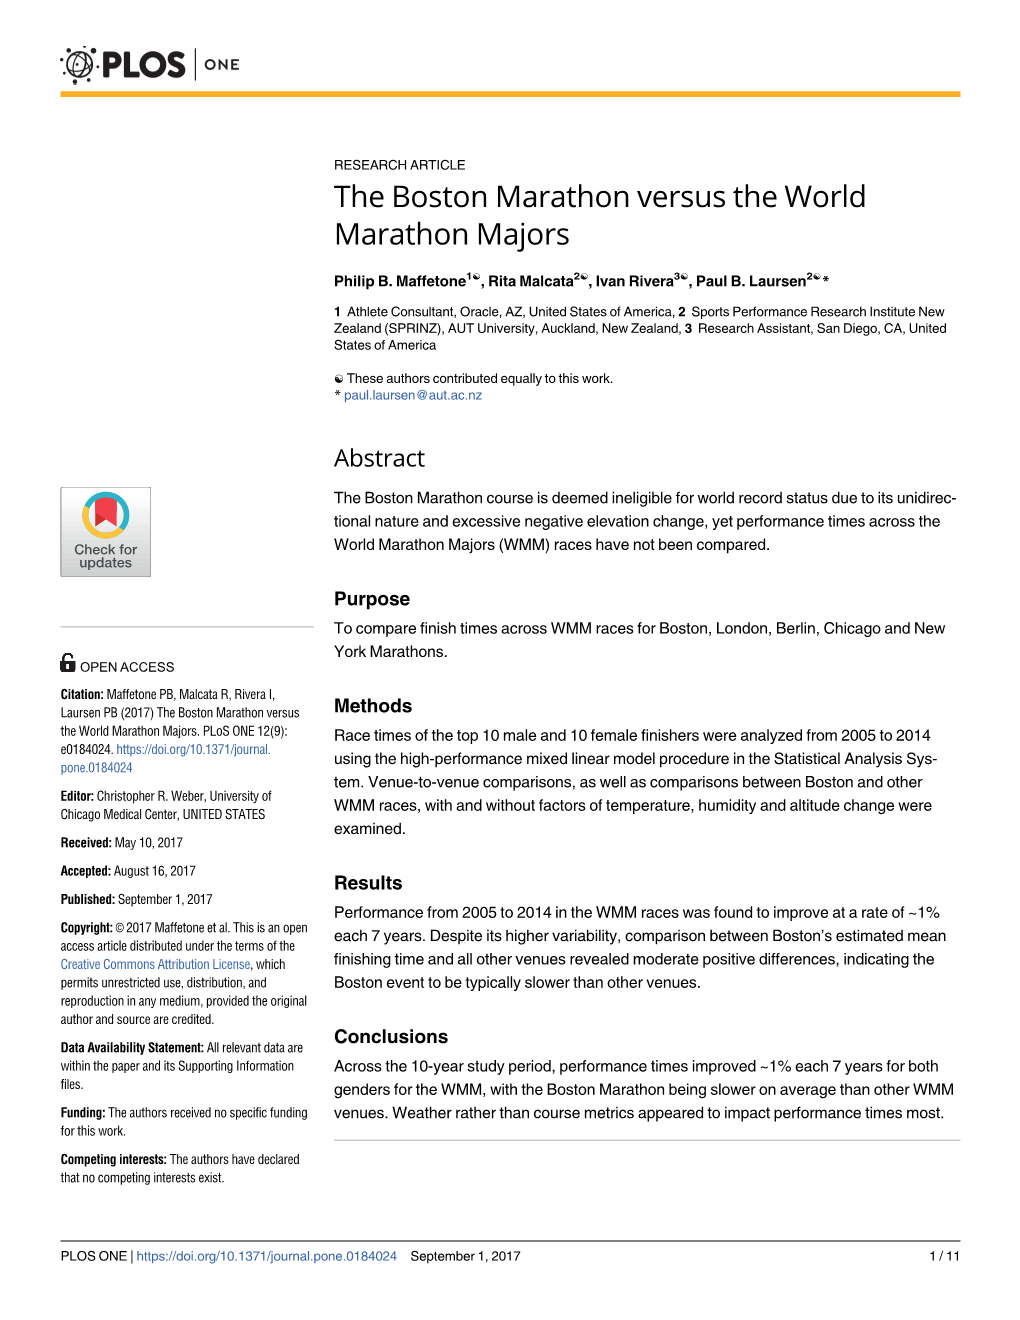 The Boston Marathon Versus the World Marathon Majors